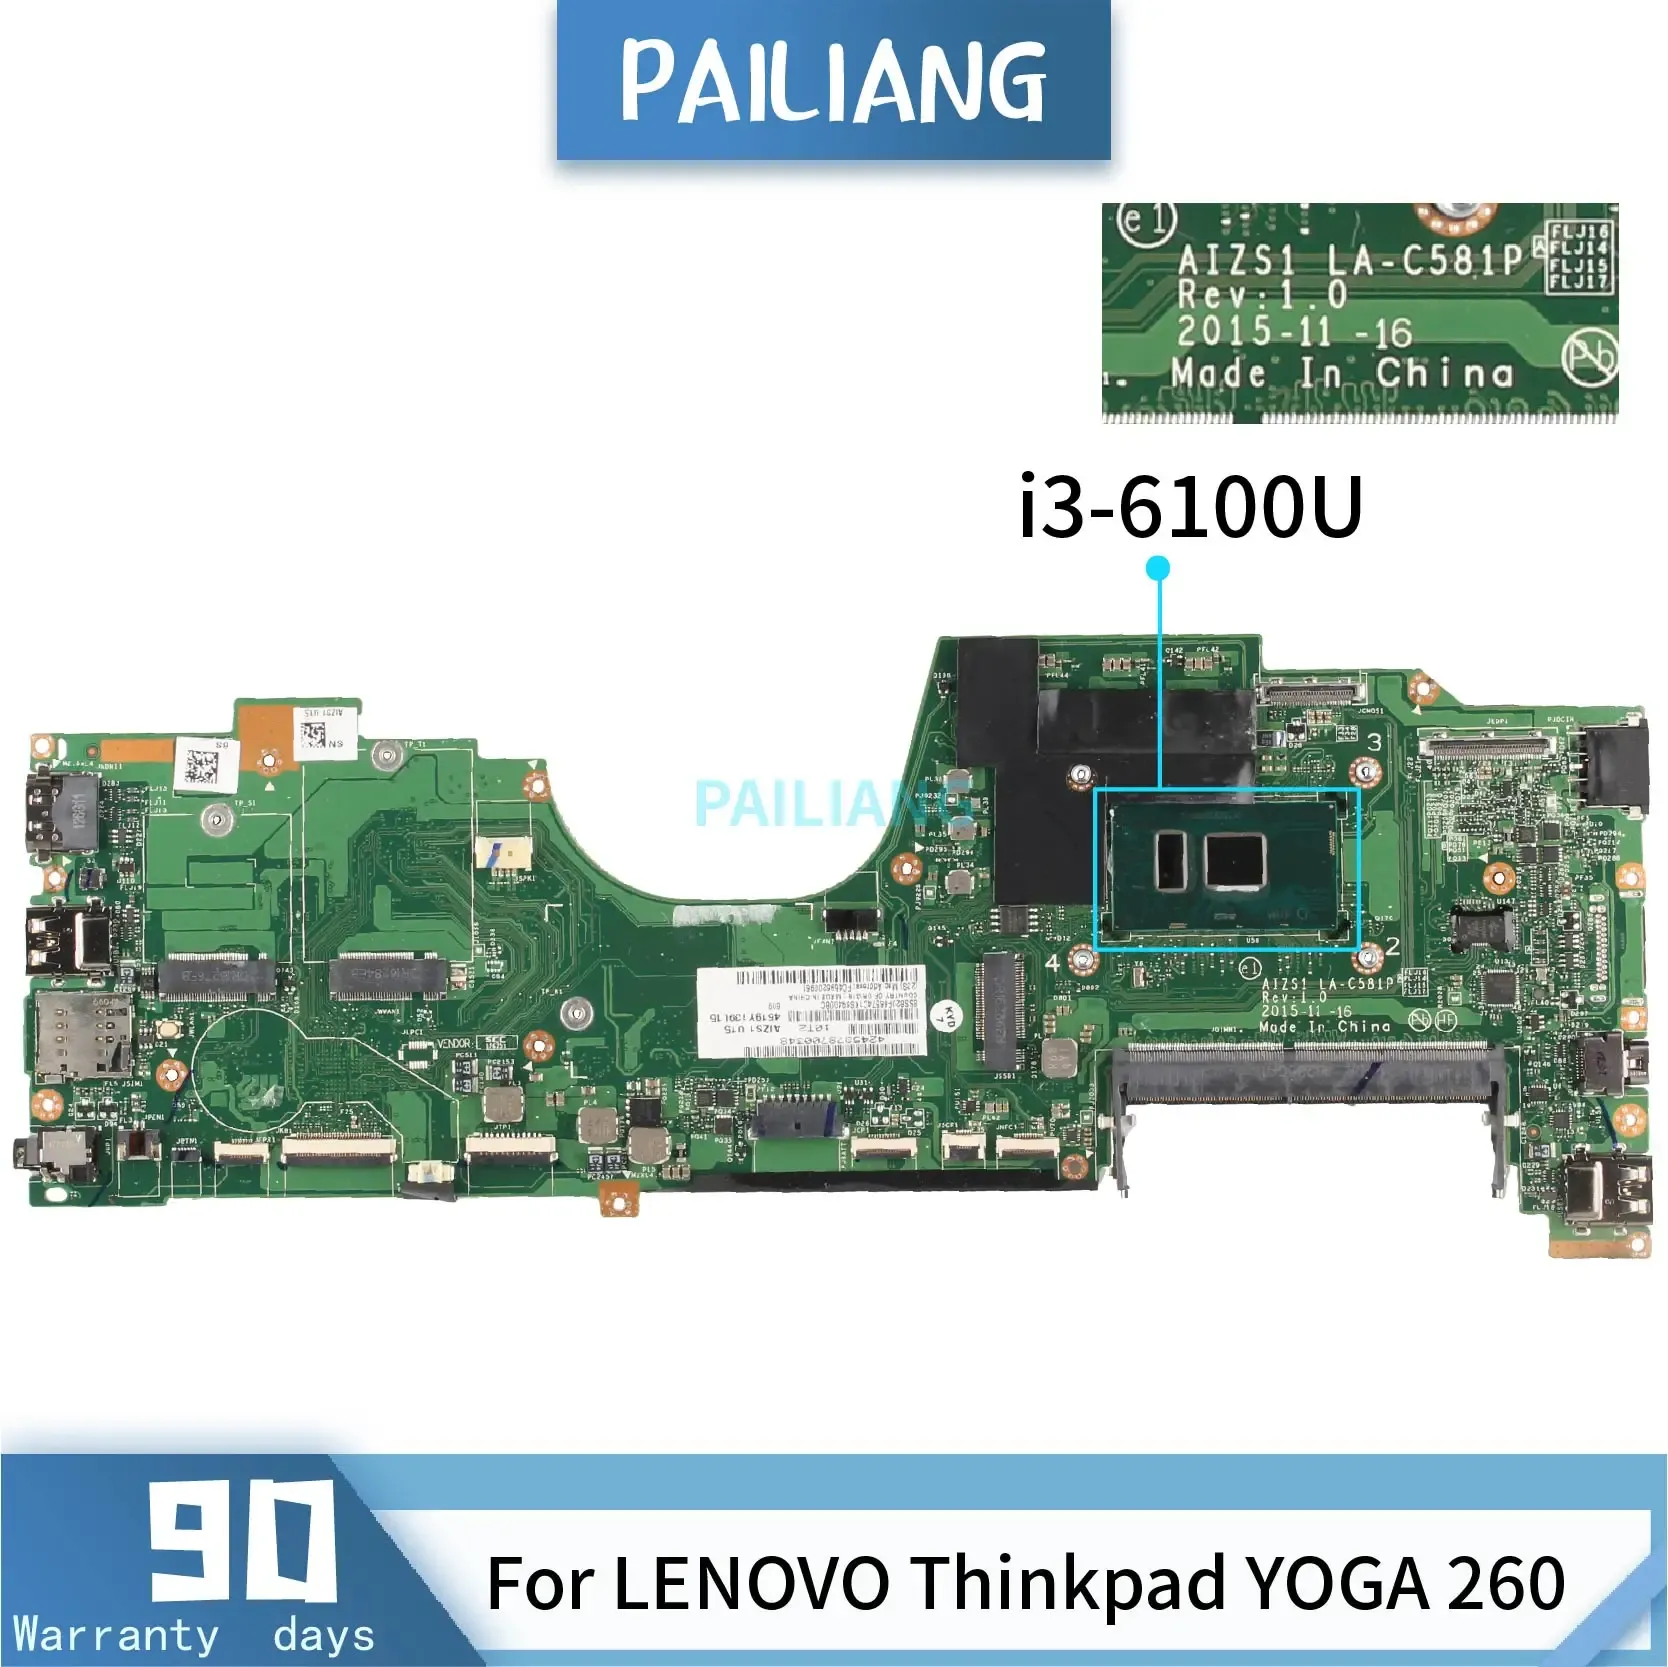 Rams Lac581p för Lenovo ThinkPad Yoga 260 Laptop Motherboard AIZS1 SR2EU I36100U Notebook Mainboard Tested DDR3